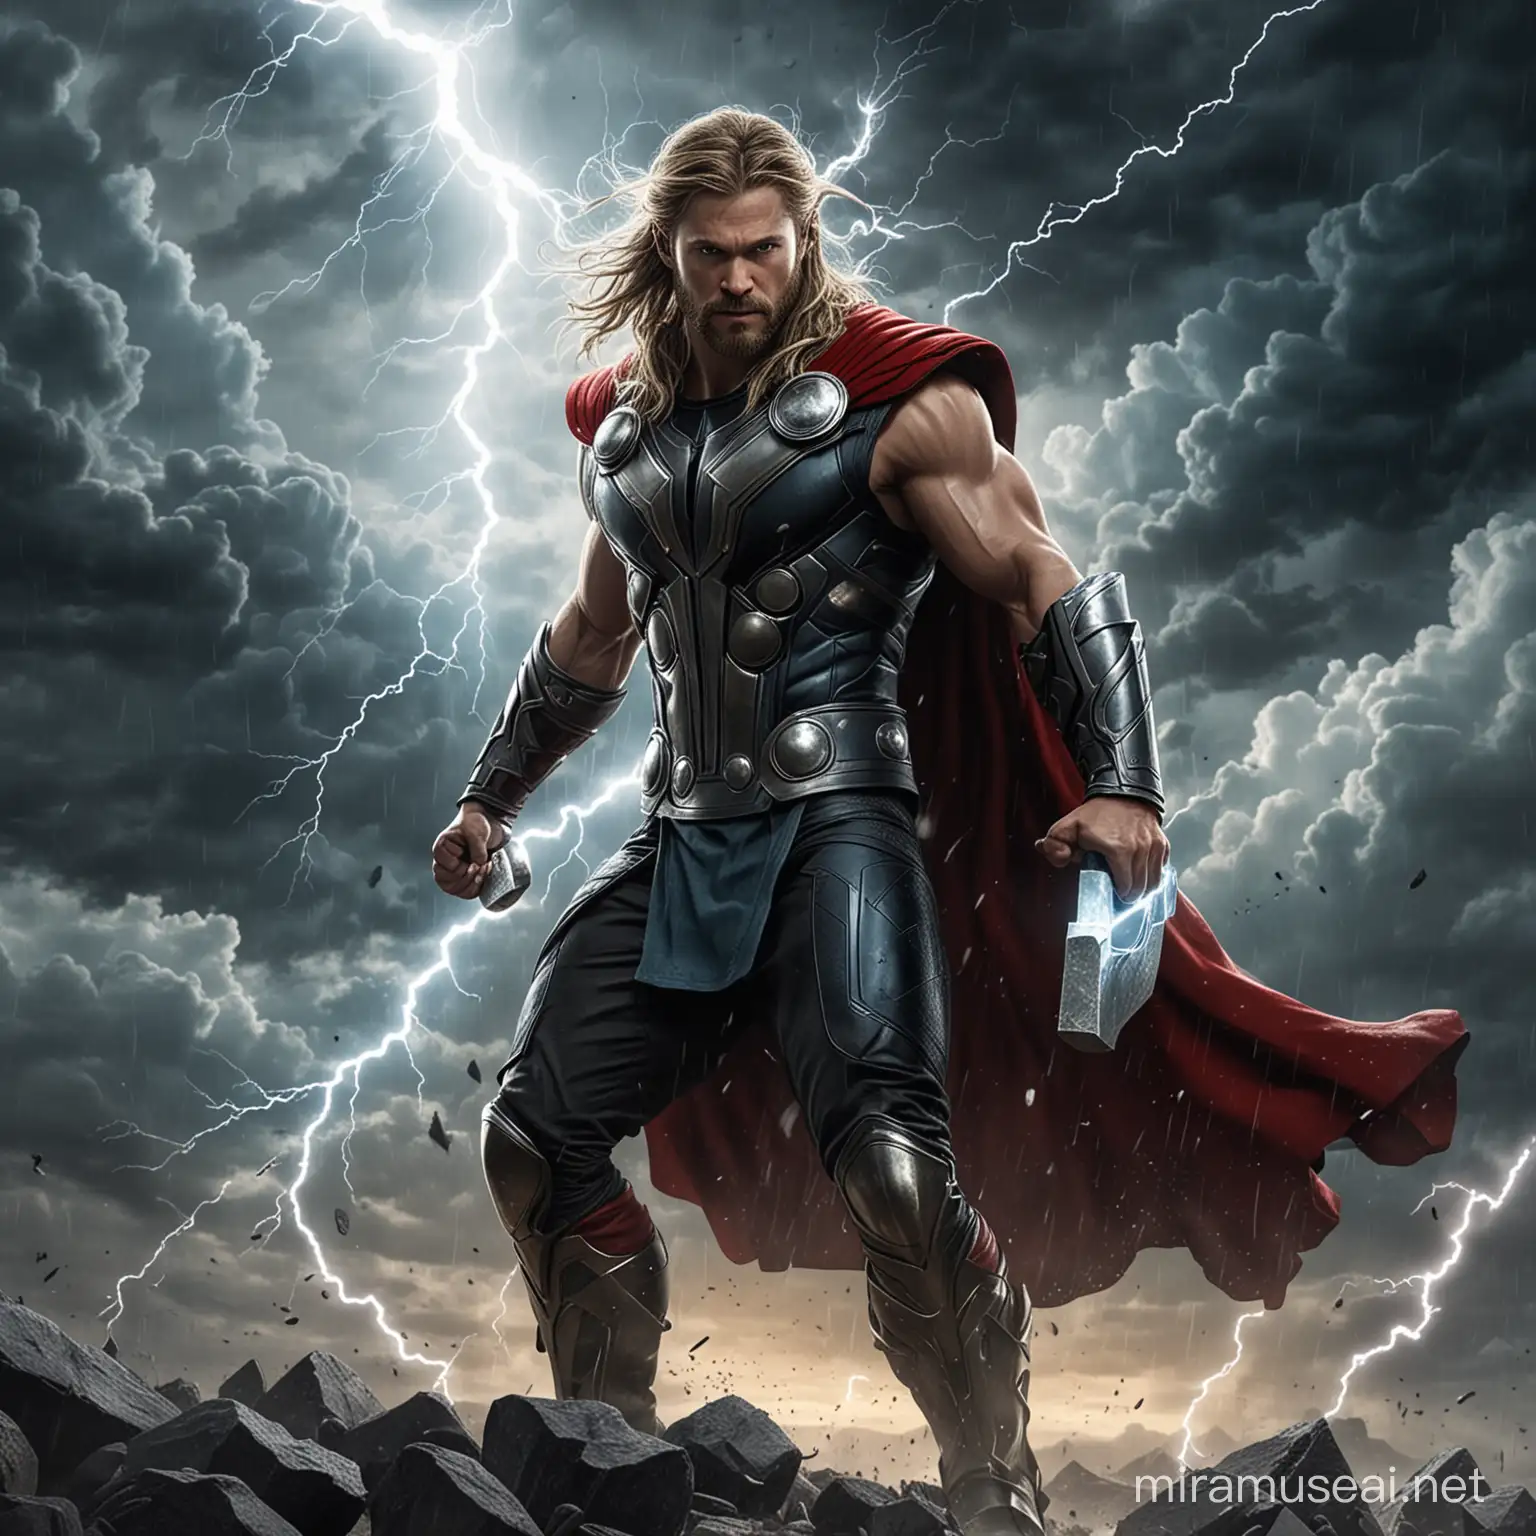 Mighty Thor Summoning Lightning in HighResolution 4K Epic Superhero Art